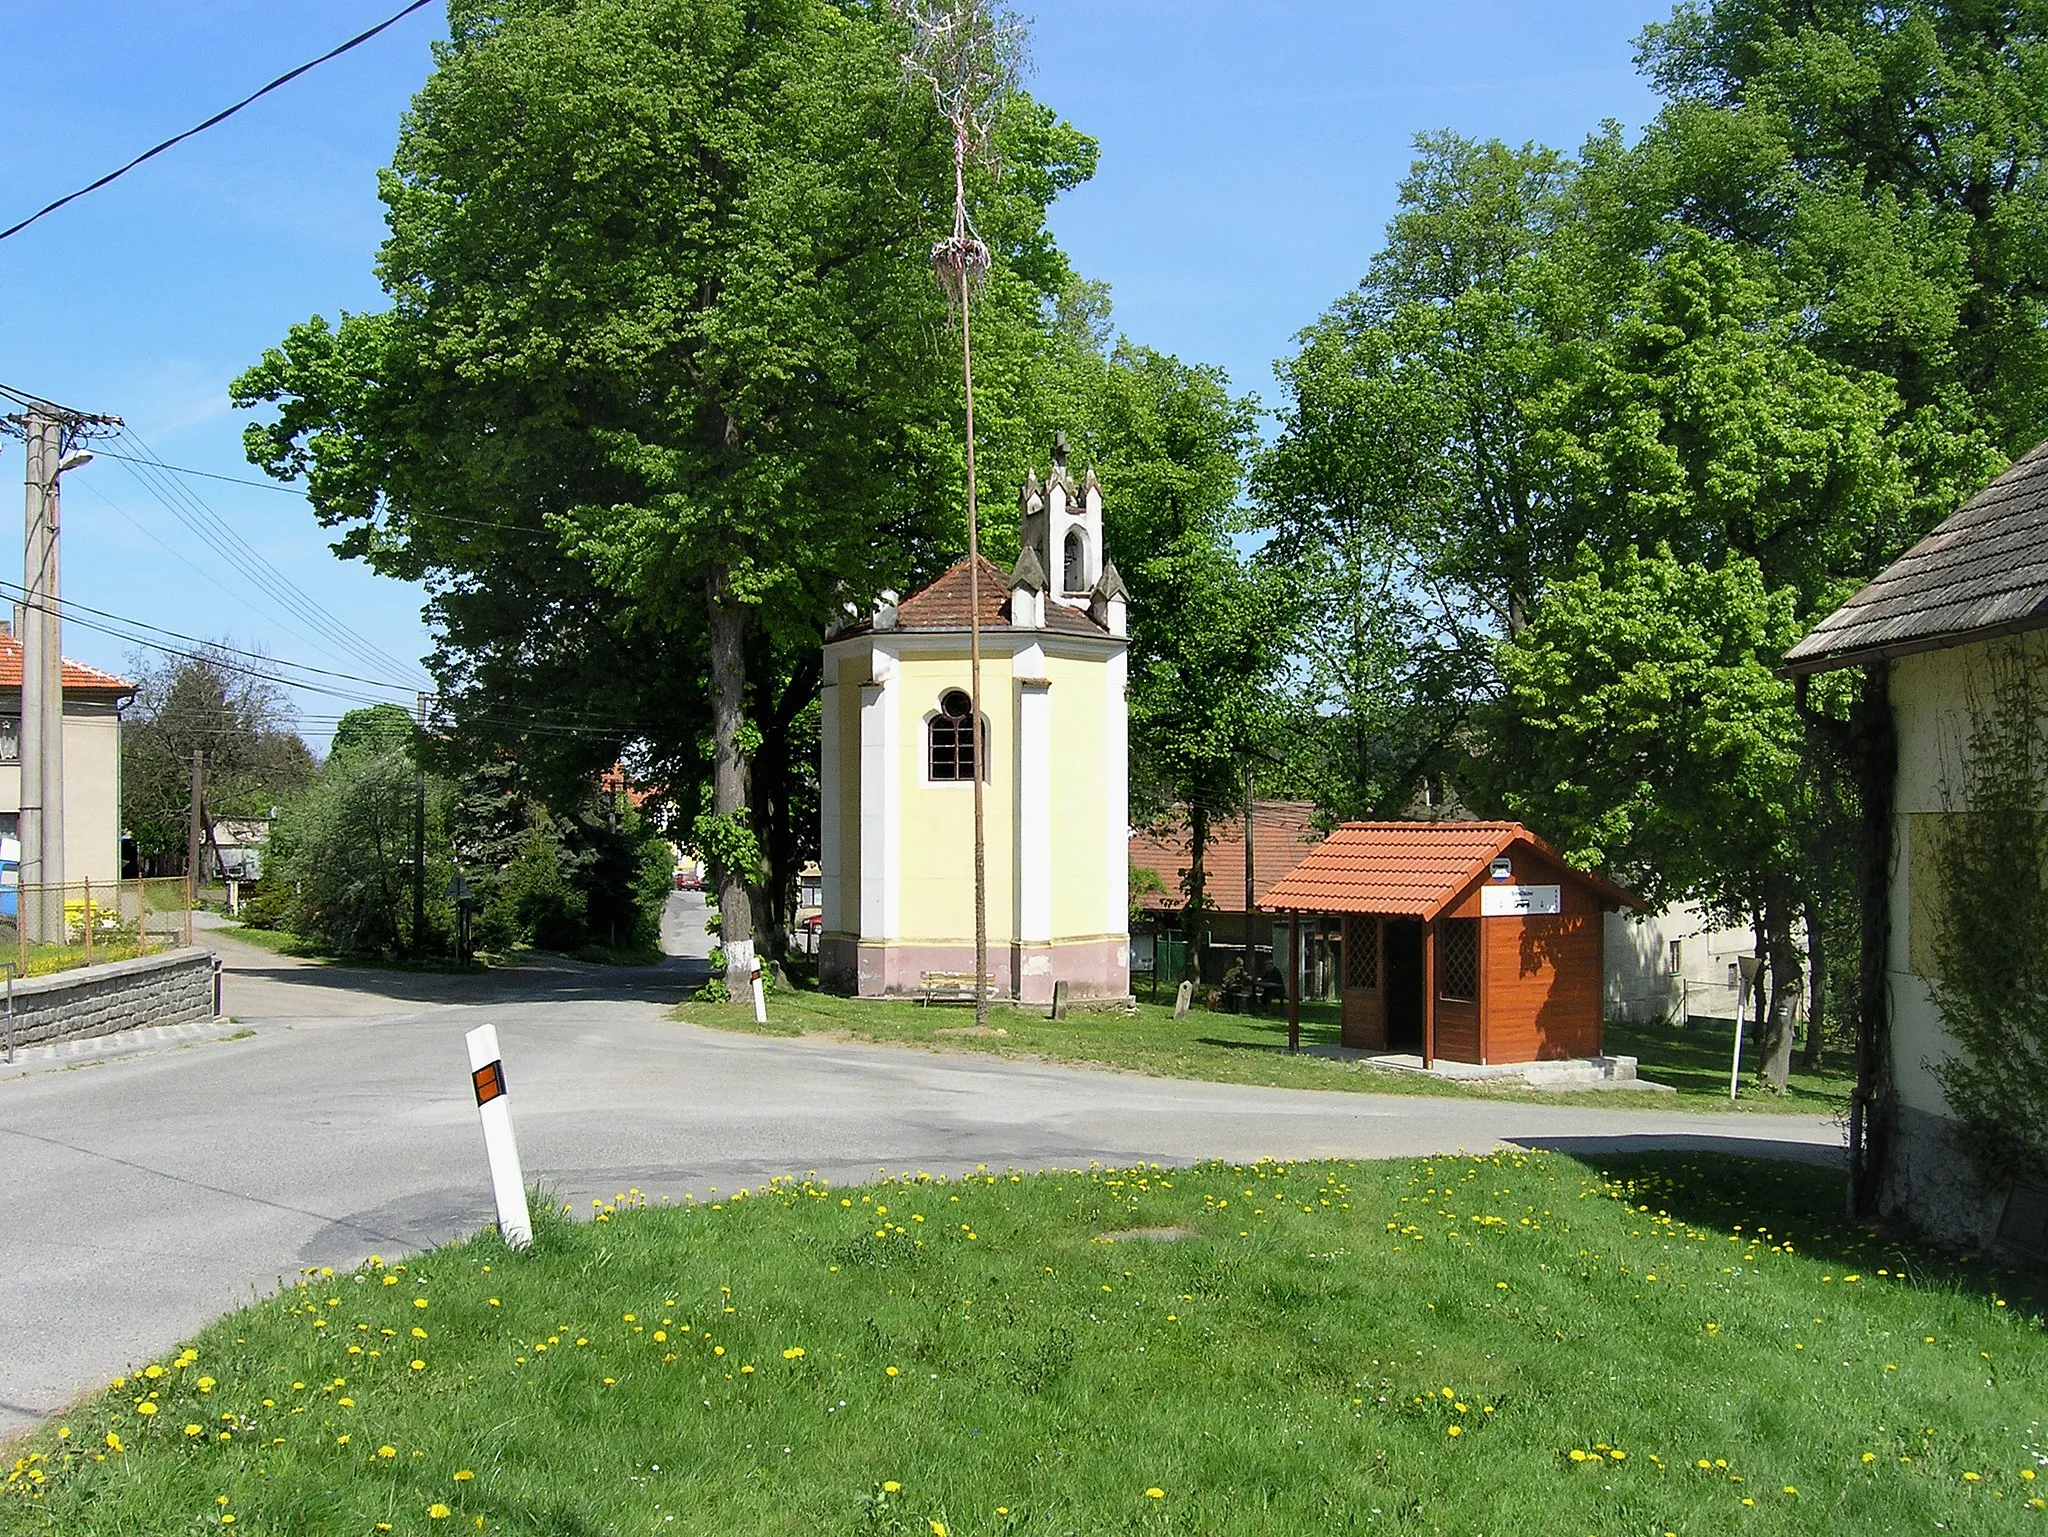 Photo showing: Common in Smilkov village, Czech Republic